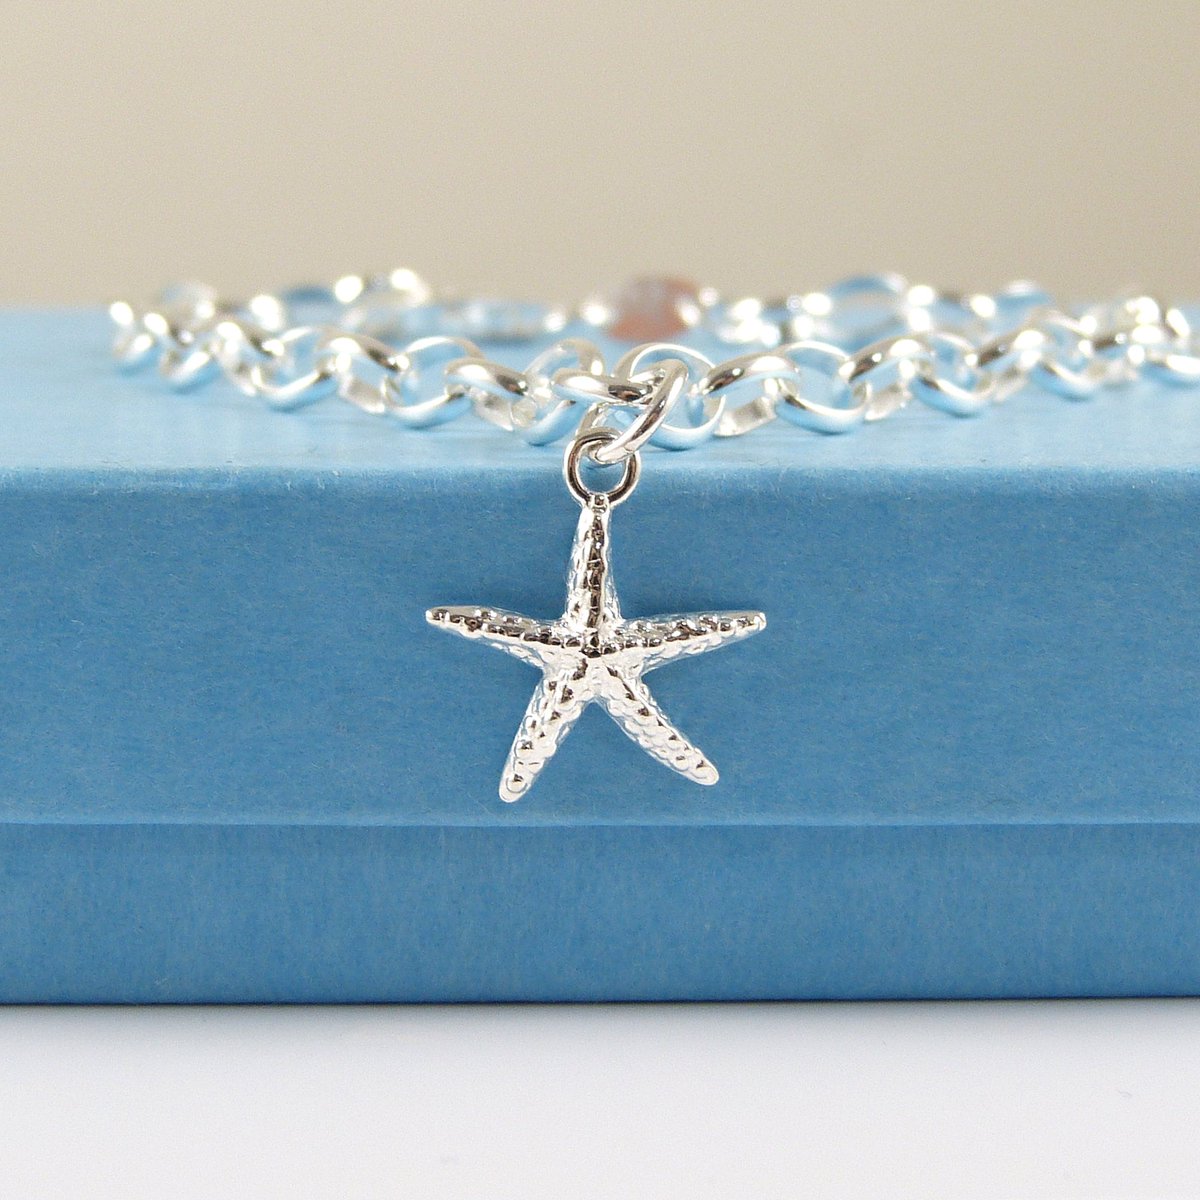 Sterling Silver Starfish Bracelet Silver Starfish Gift Idea Starfish Jewellery Marine Jewelry Dainty Bracelet Gift For Friend tuppu.net/8d5e1632 #thestrandline #womaninbizhour #UKGiftAM #craftbizparty #UKGiftHour #elevenseshour #EarlyBiz #MHHSBD